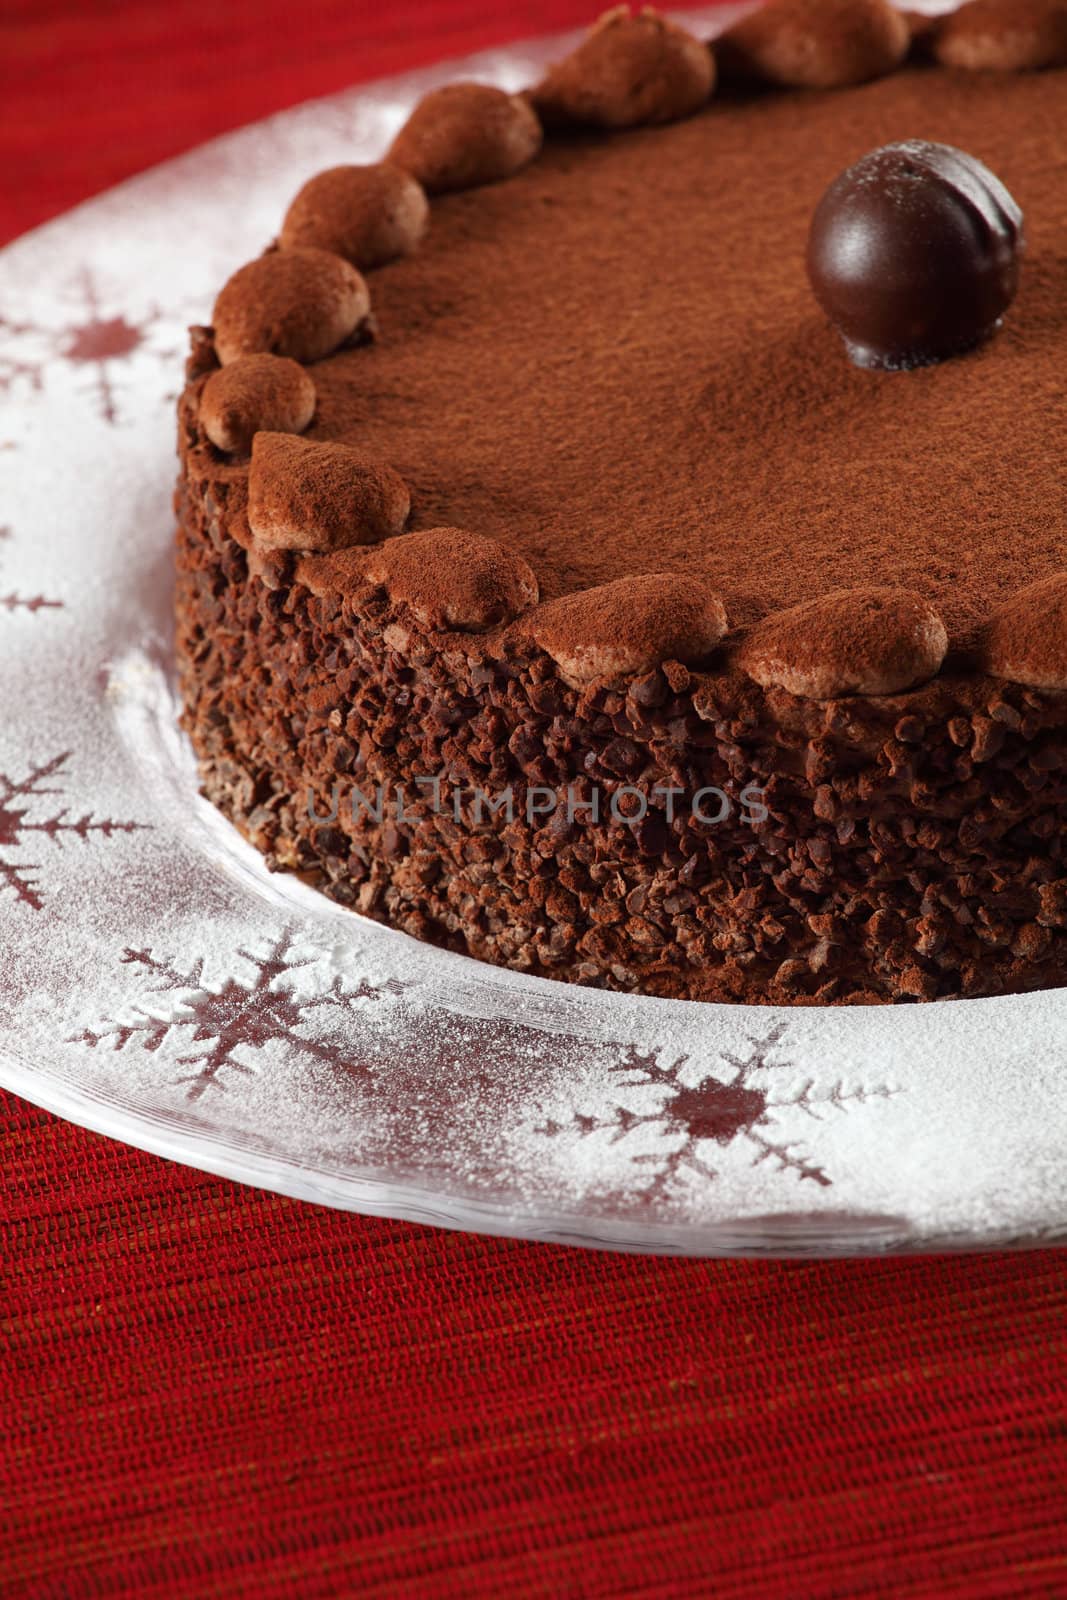 Chocolate truffle cake by sumners